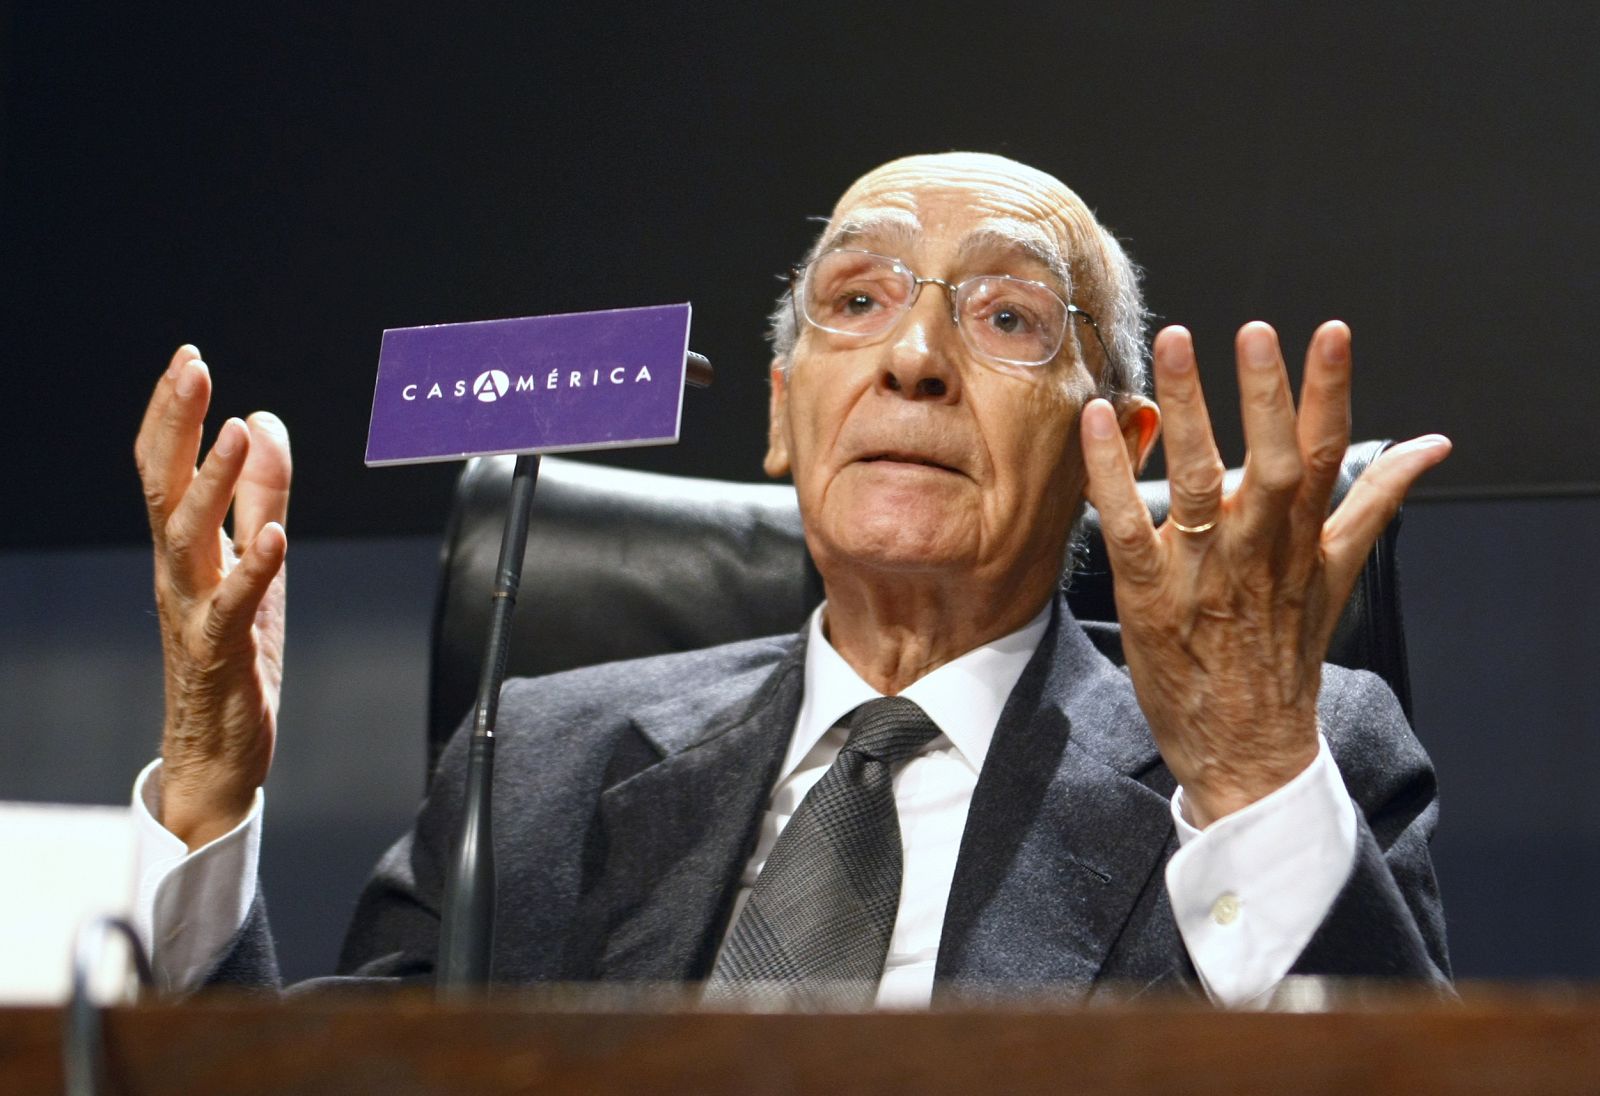 Portuguese Nobel Literature laureate Jose Saramago gestures during a news conference in Madrid